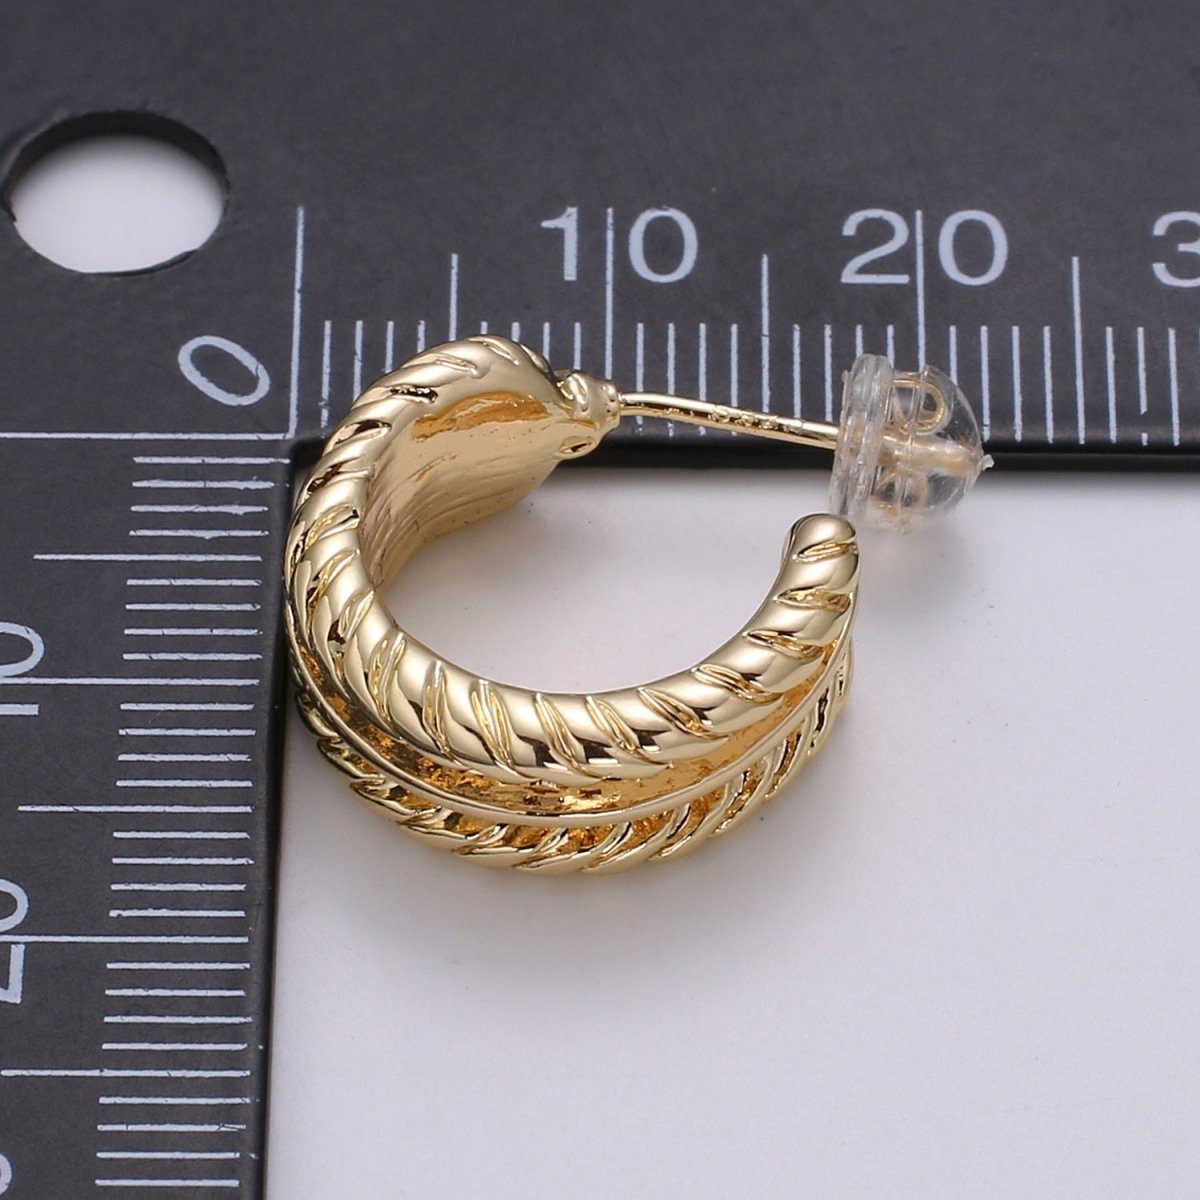 Gold Twisted Hoop Earrings • Bold Gold Hoop Earrings • Chunky Earrings • Statement Hoops • 18k Gold Filled Hoops Earring gift for her Q-446 - DLUXCA